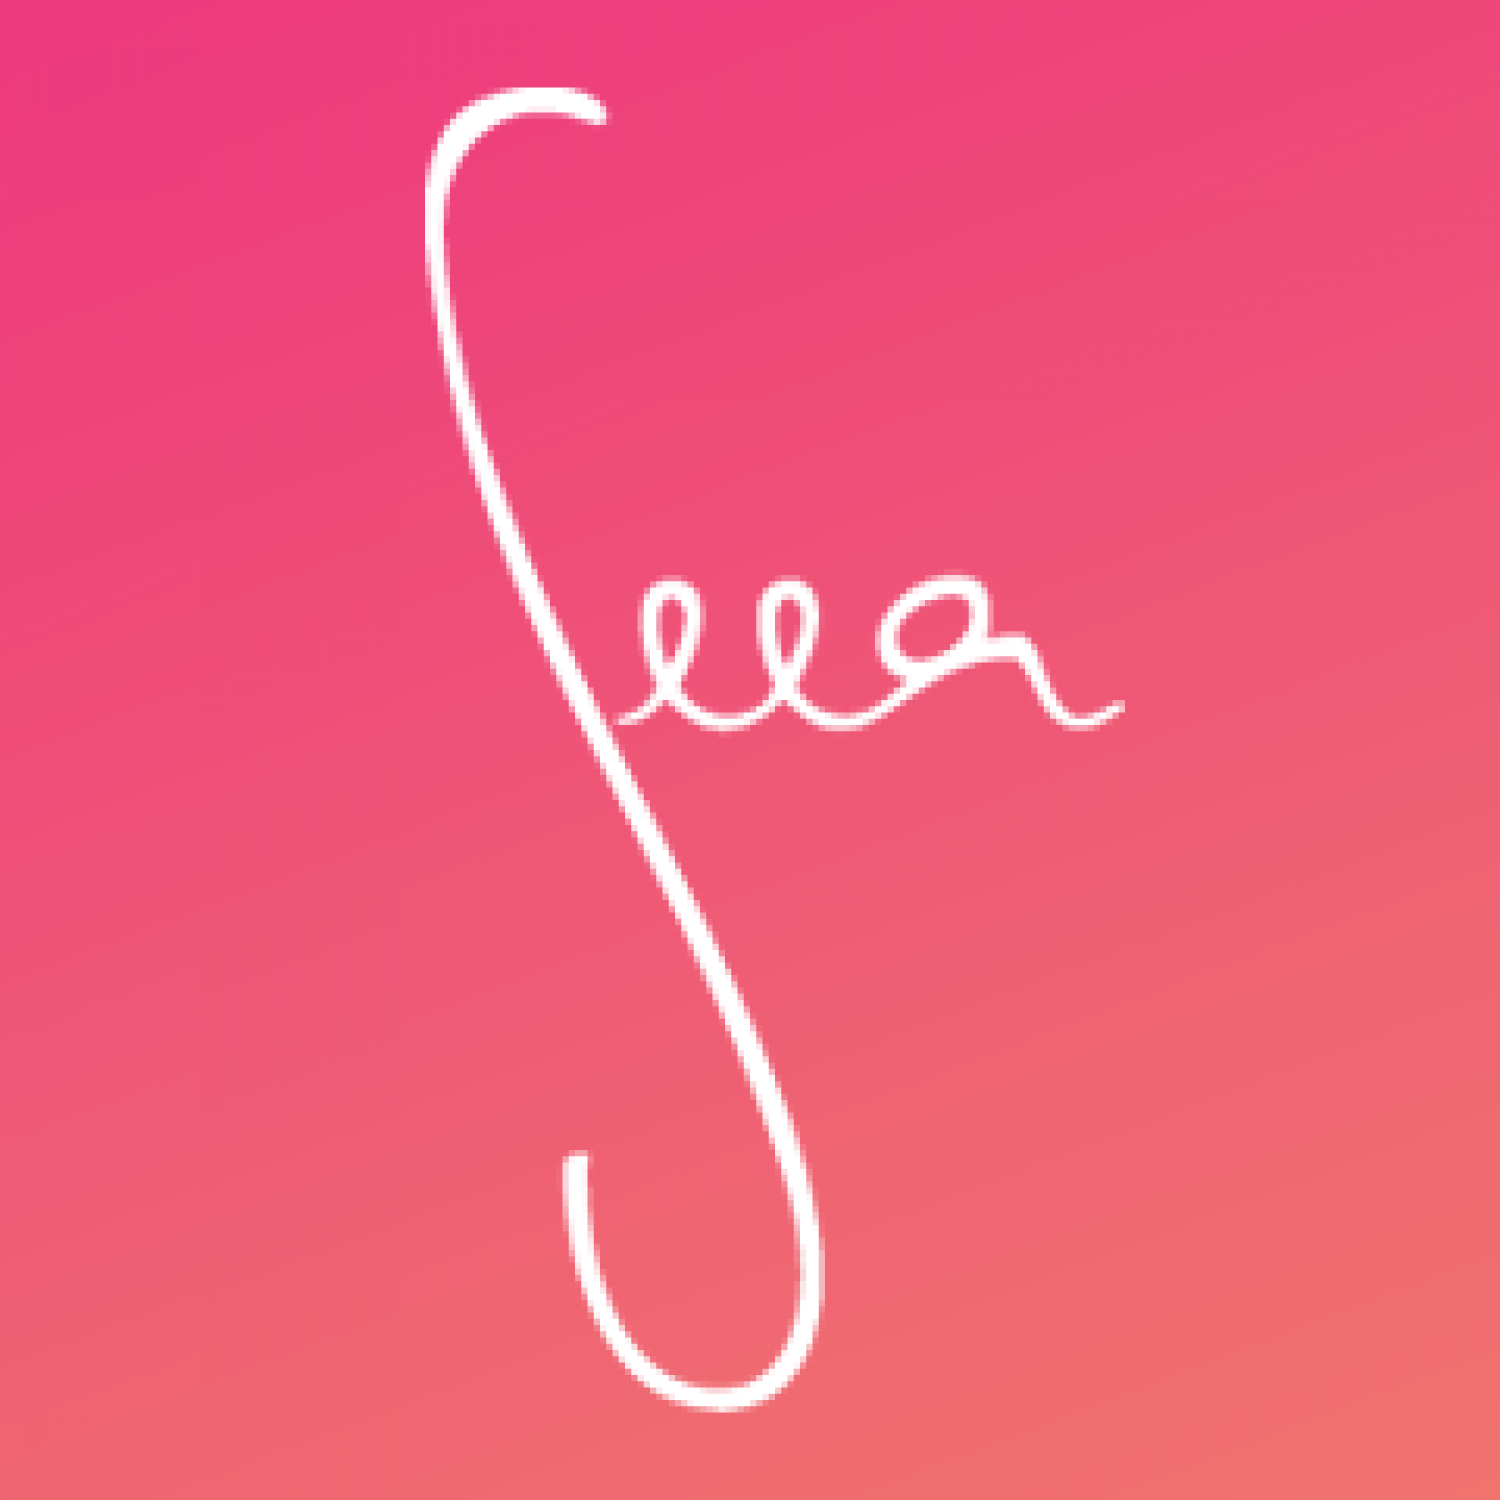 About "Seea"